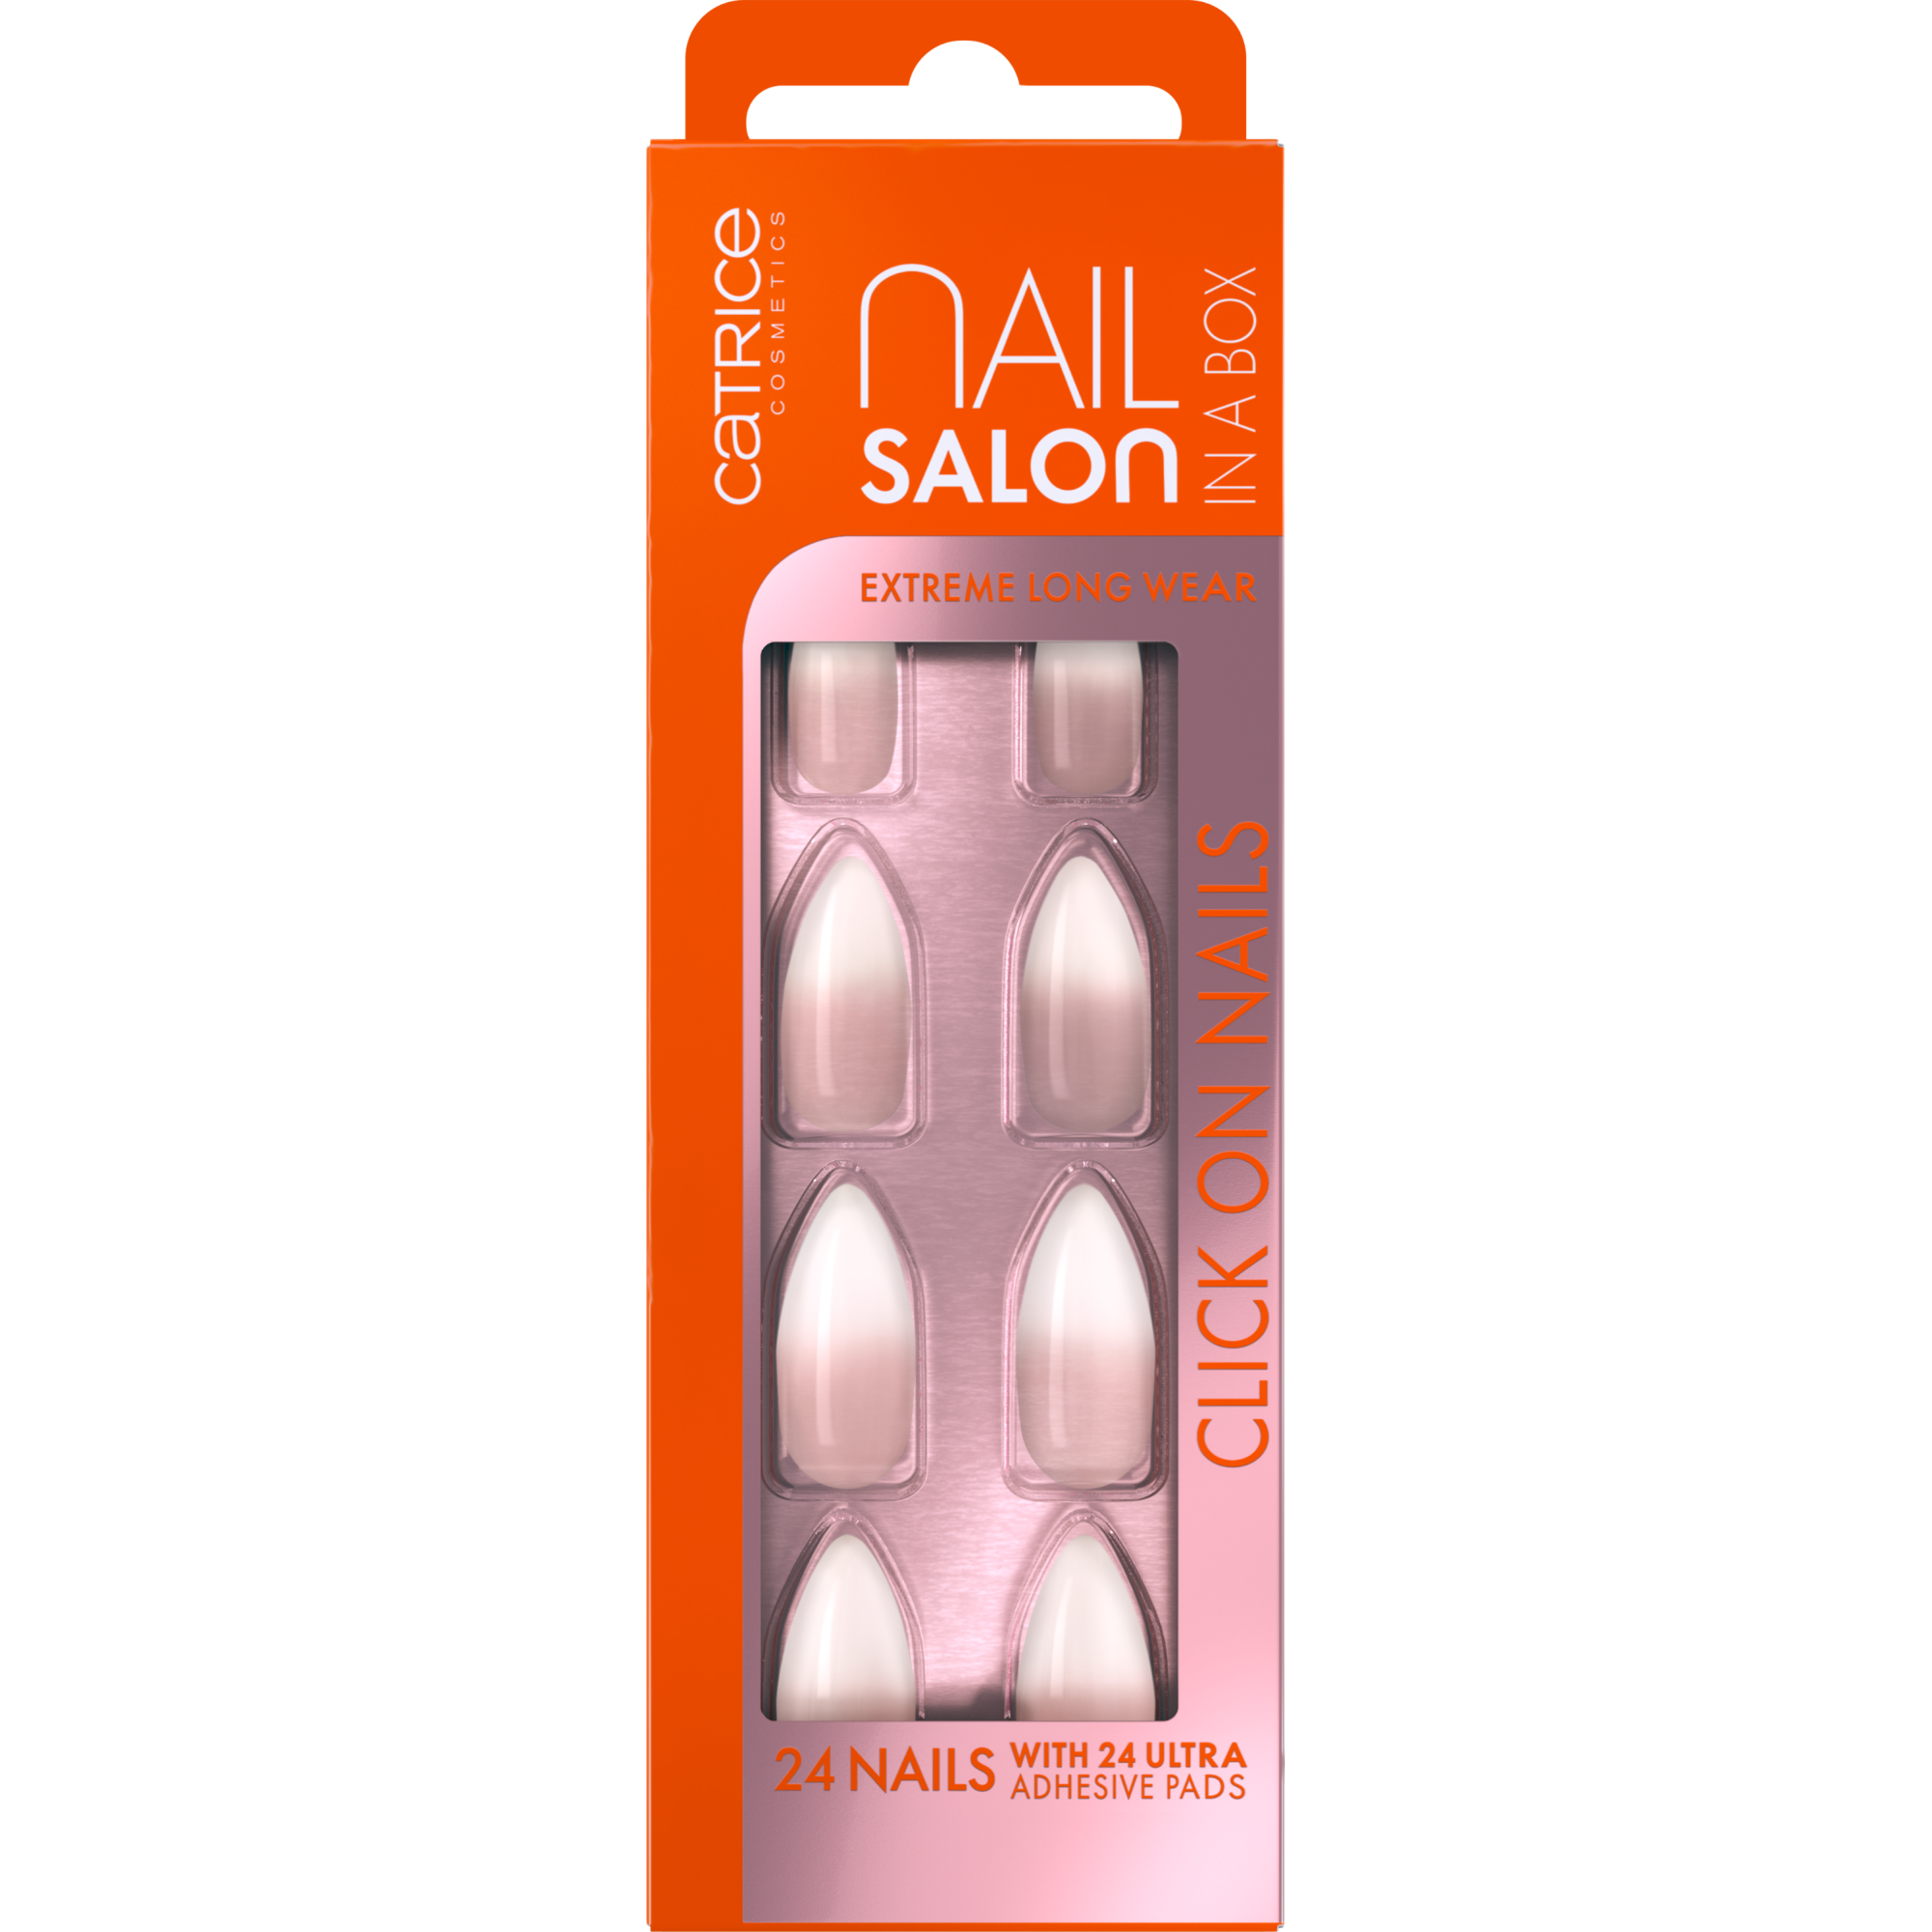 Nail Salon in a Box Click on Nails